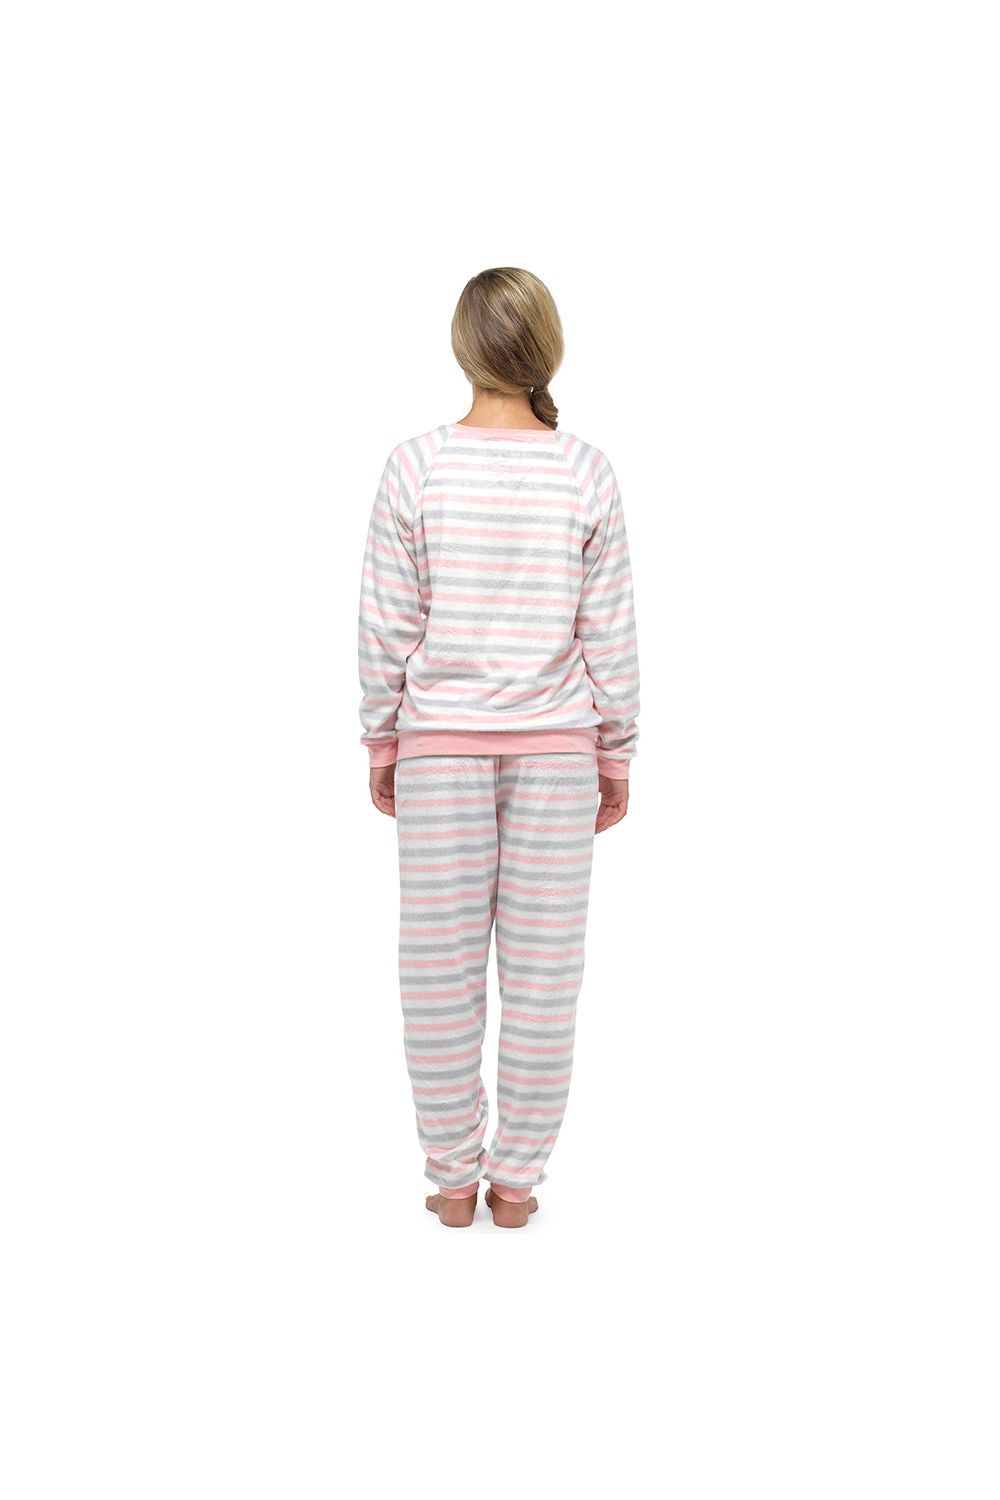 Ladies Pink Racoon Long Fleece Pyjamas - Pyjamas.com